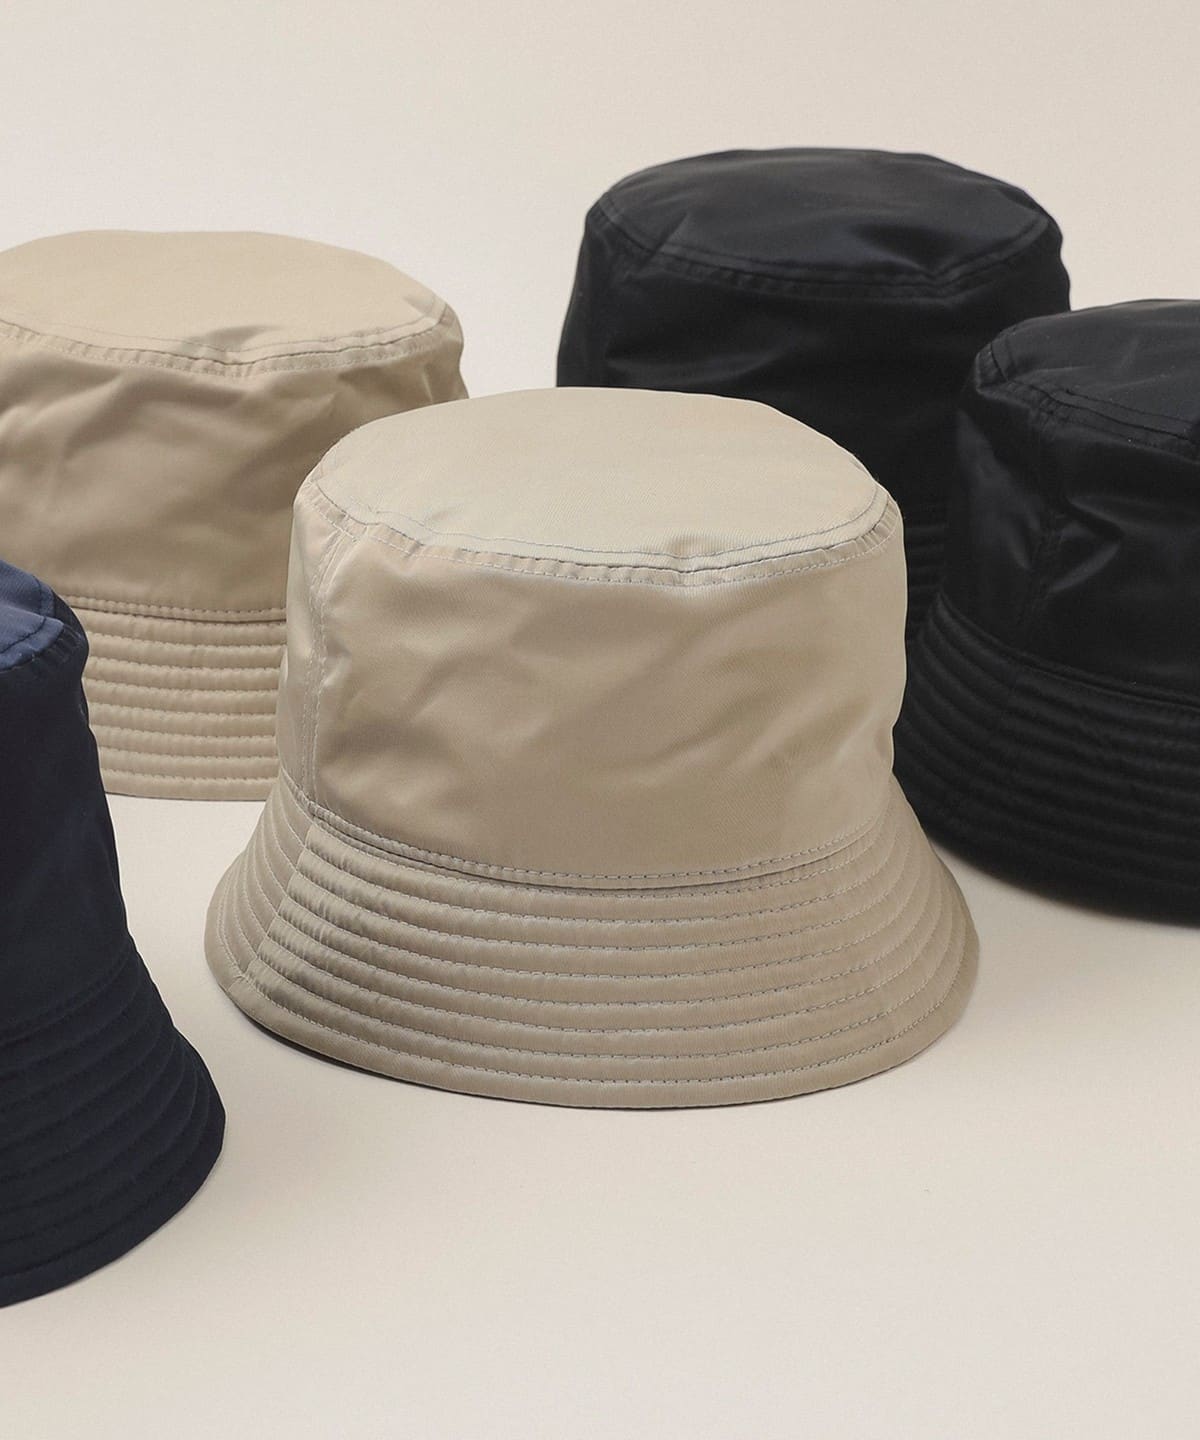 BEAMS BEAMS BEAMS bucket hat (hat) mail order | BEAMS